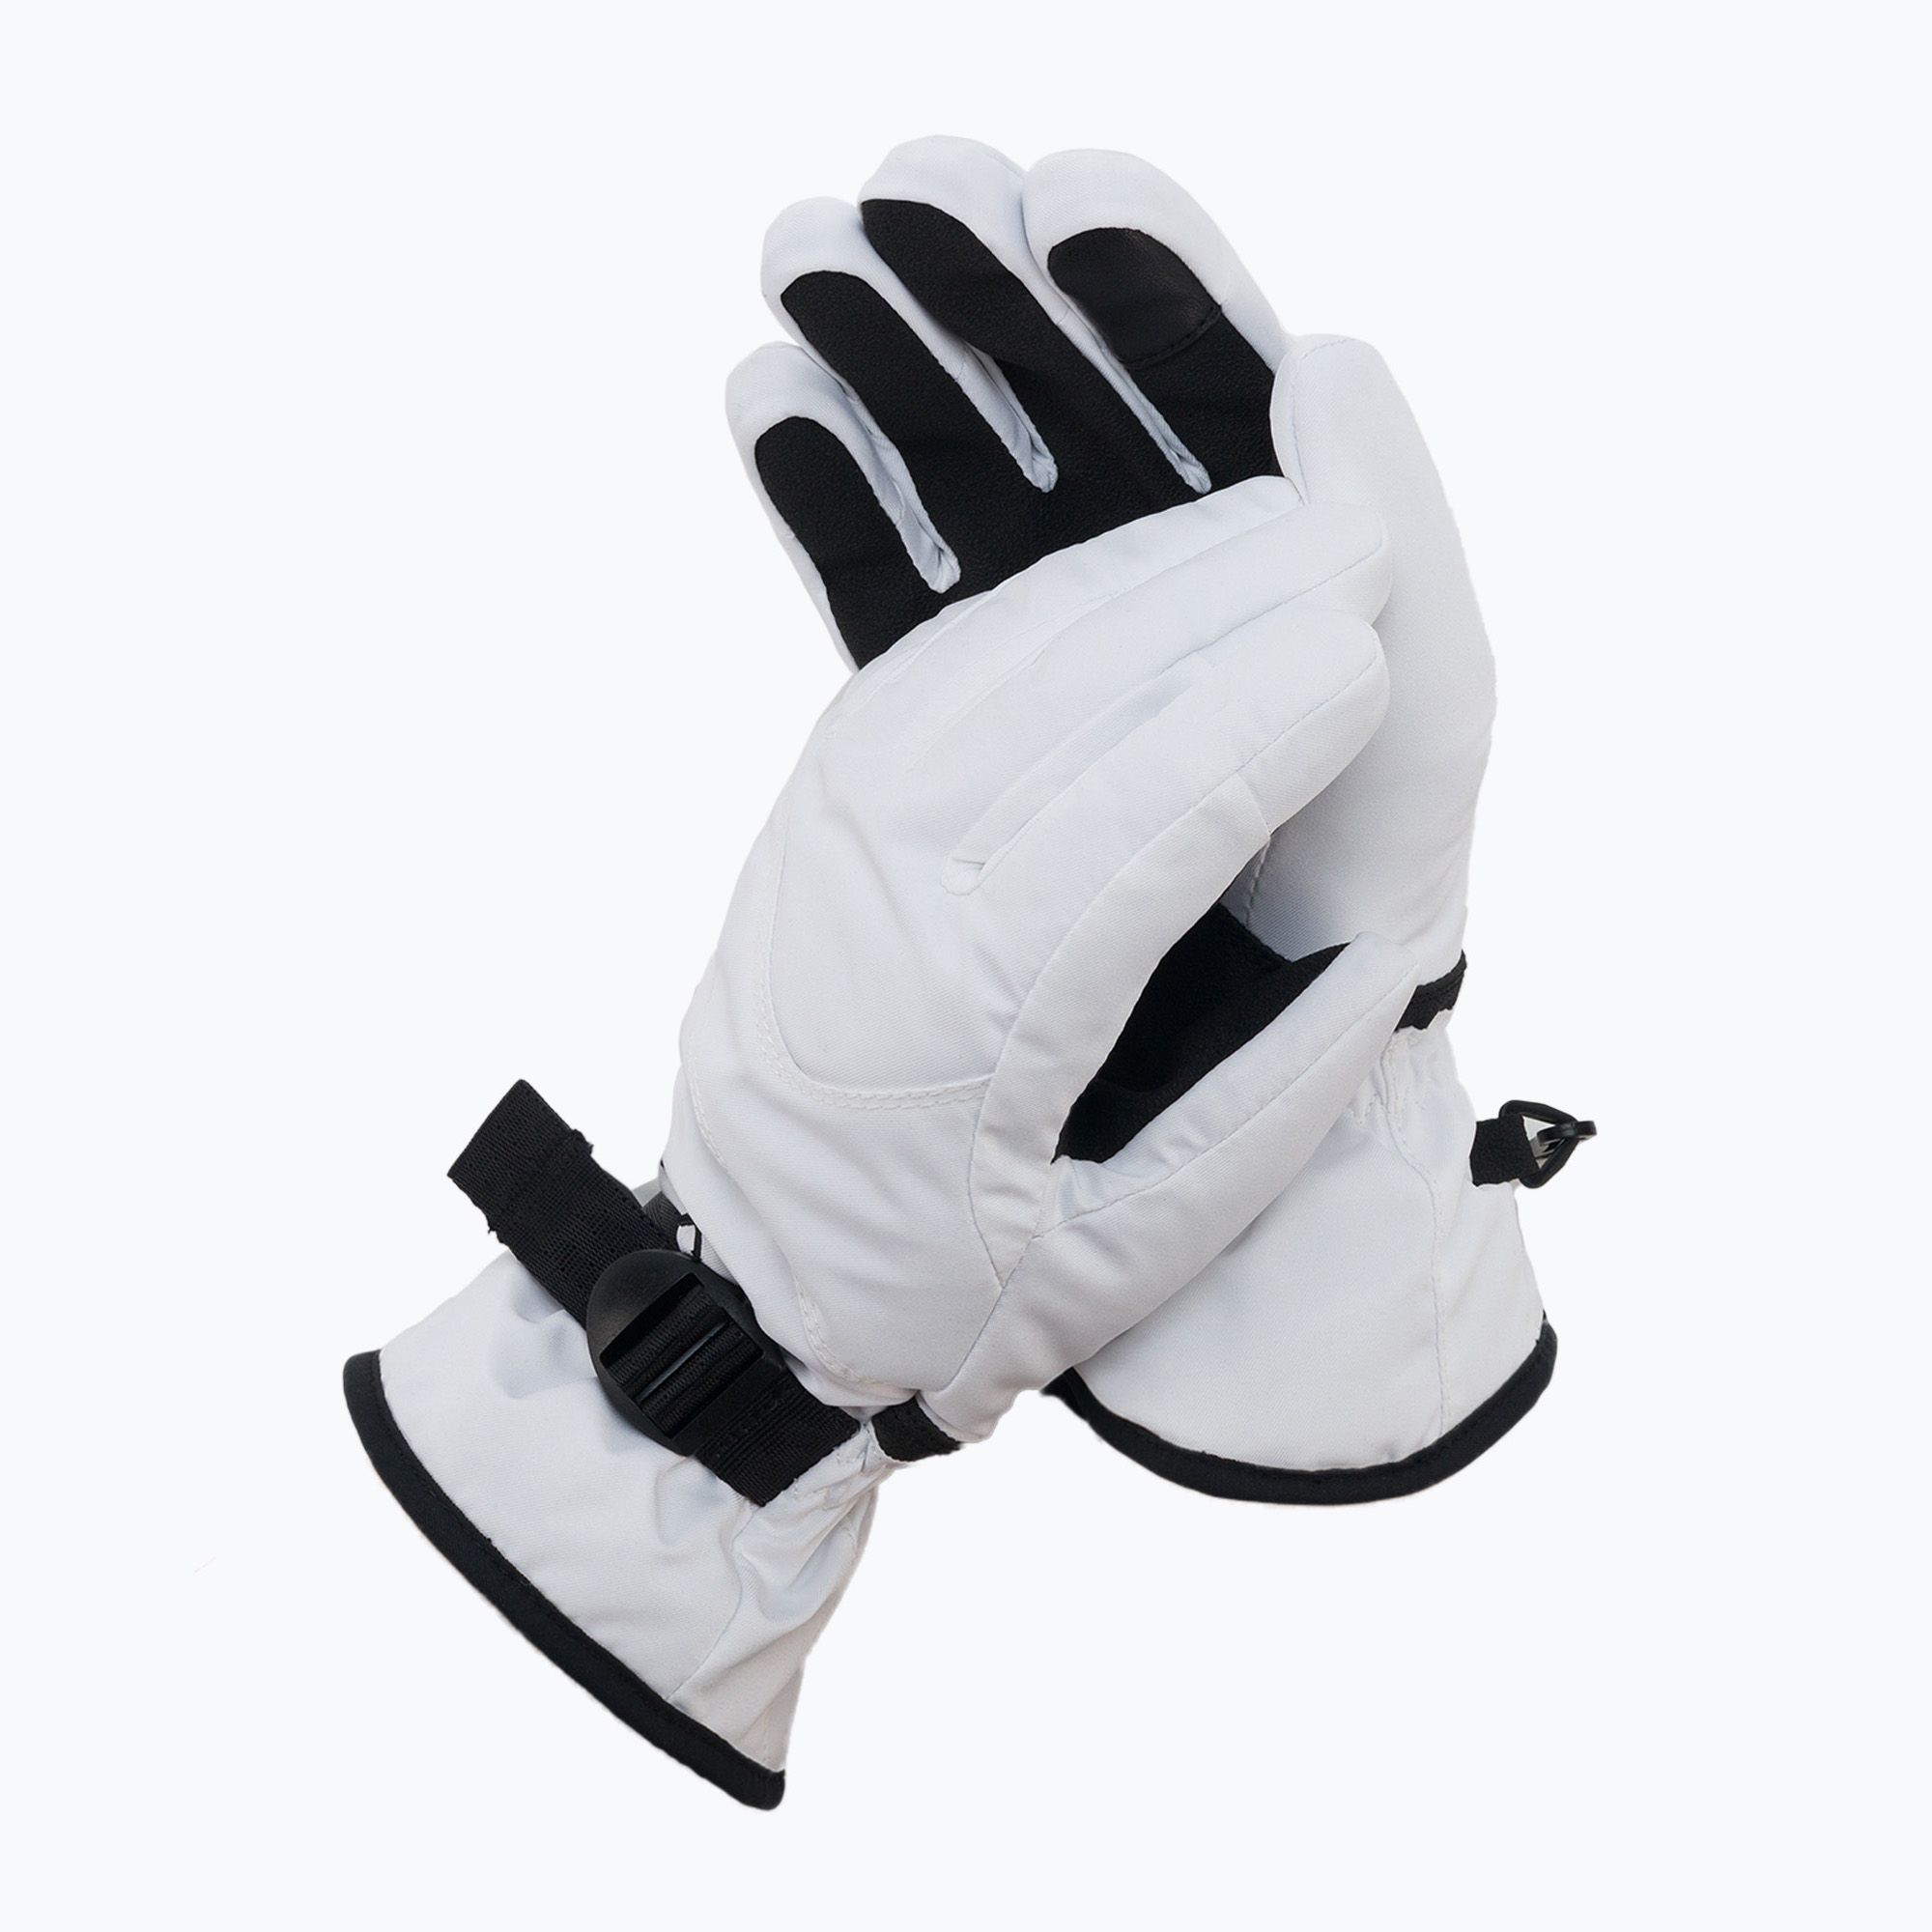 2021 Solid gloves ROXY bright Women\'s snowboard Jetty white